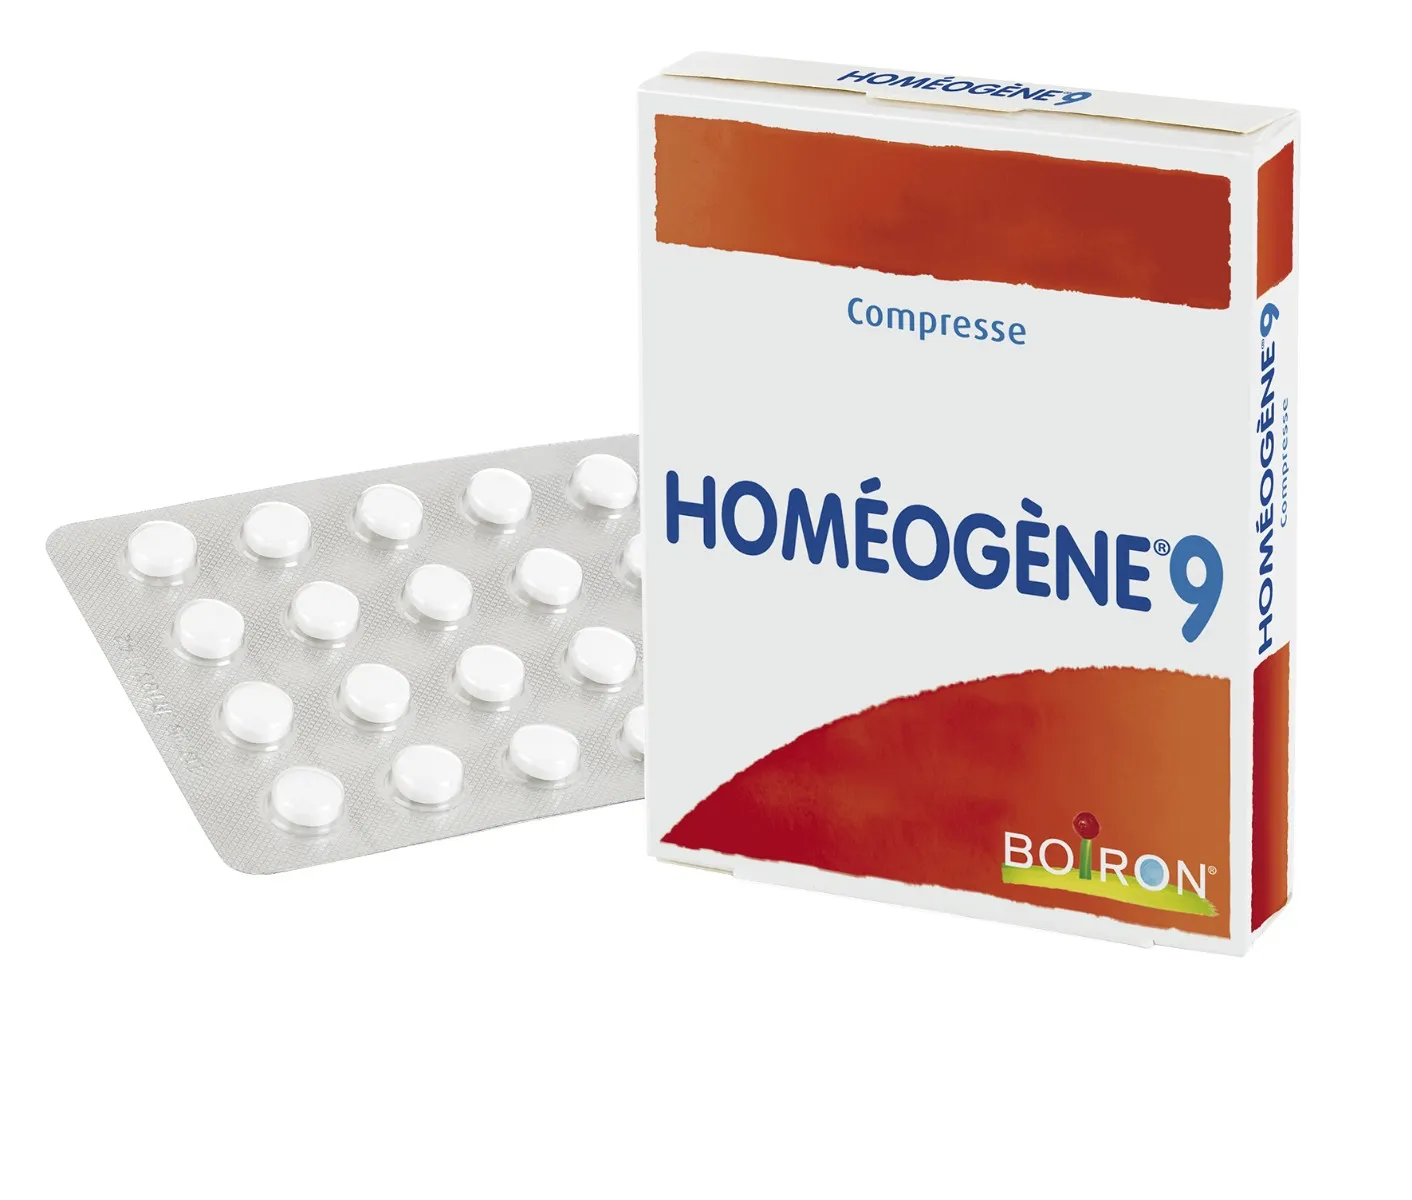 Homeogene 9 60 Compresse